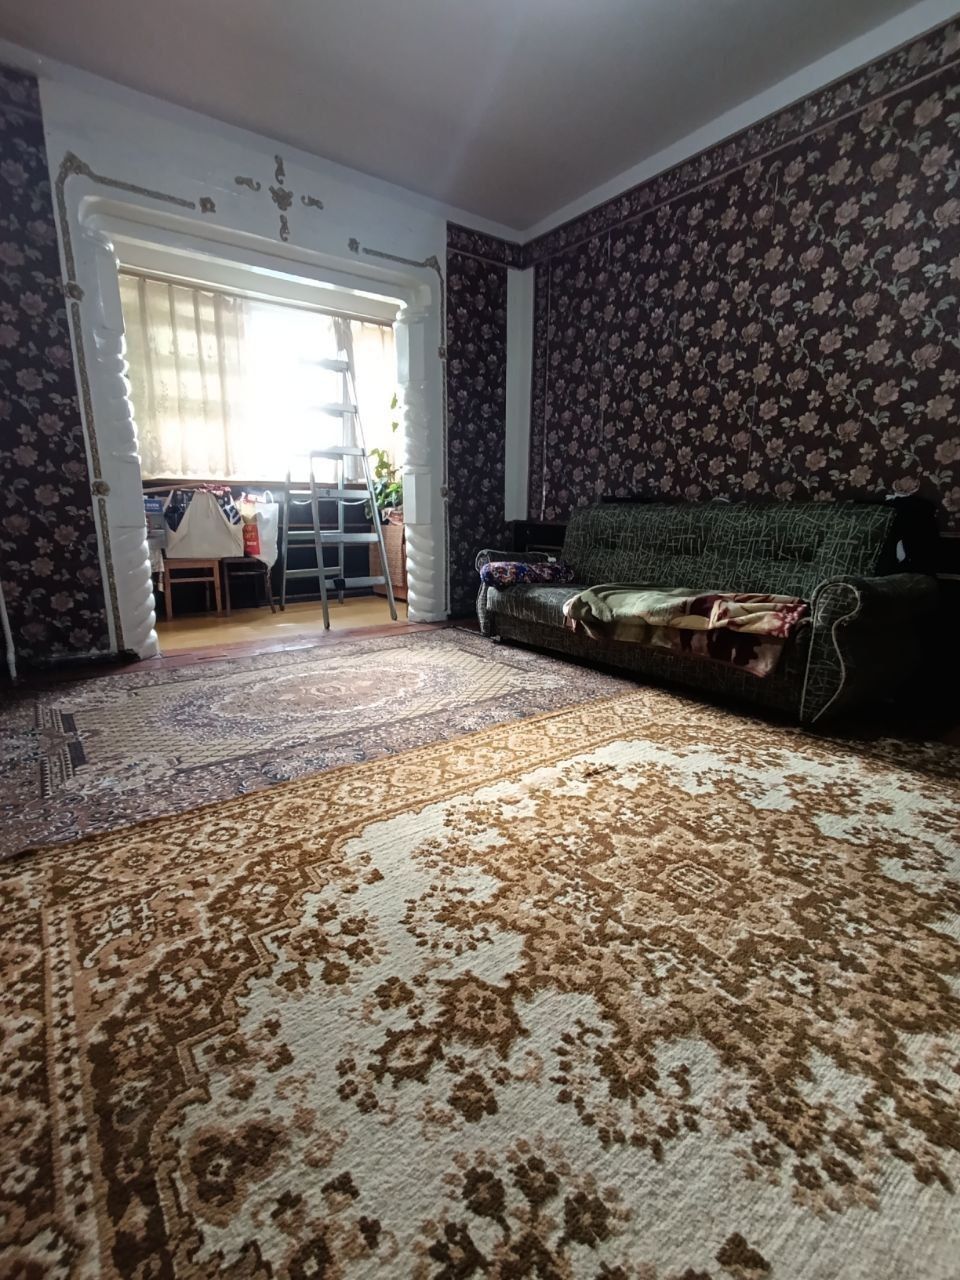 Продаётся  2-х комнатная  квартира в Янгихаётском районе